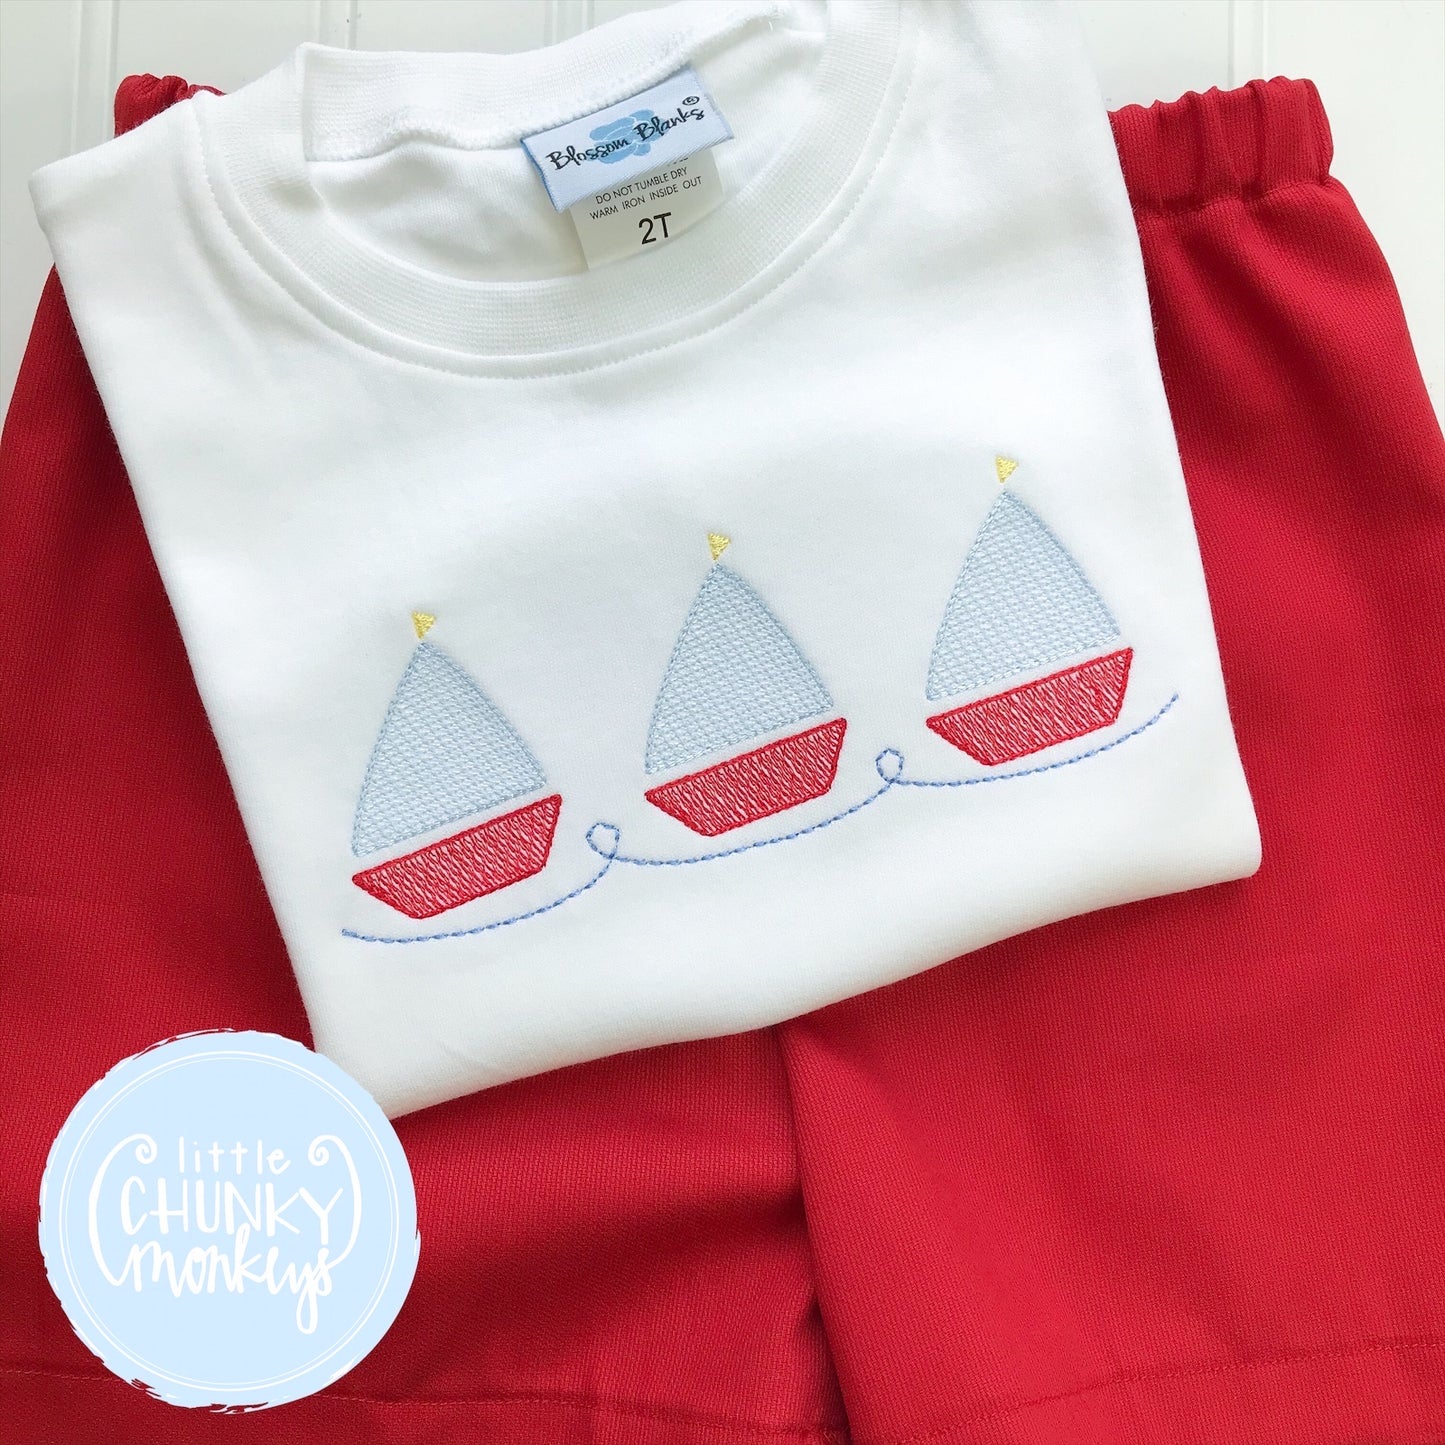 Boy Shirt - Embroidered Sailboats